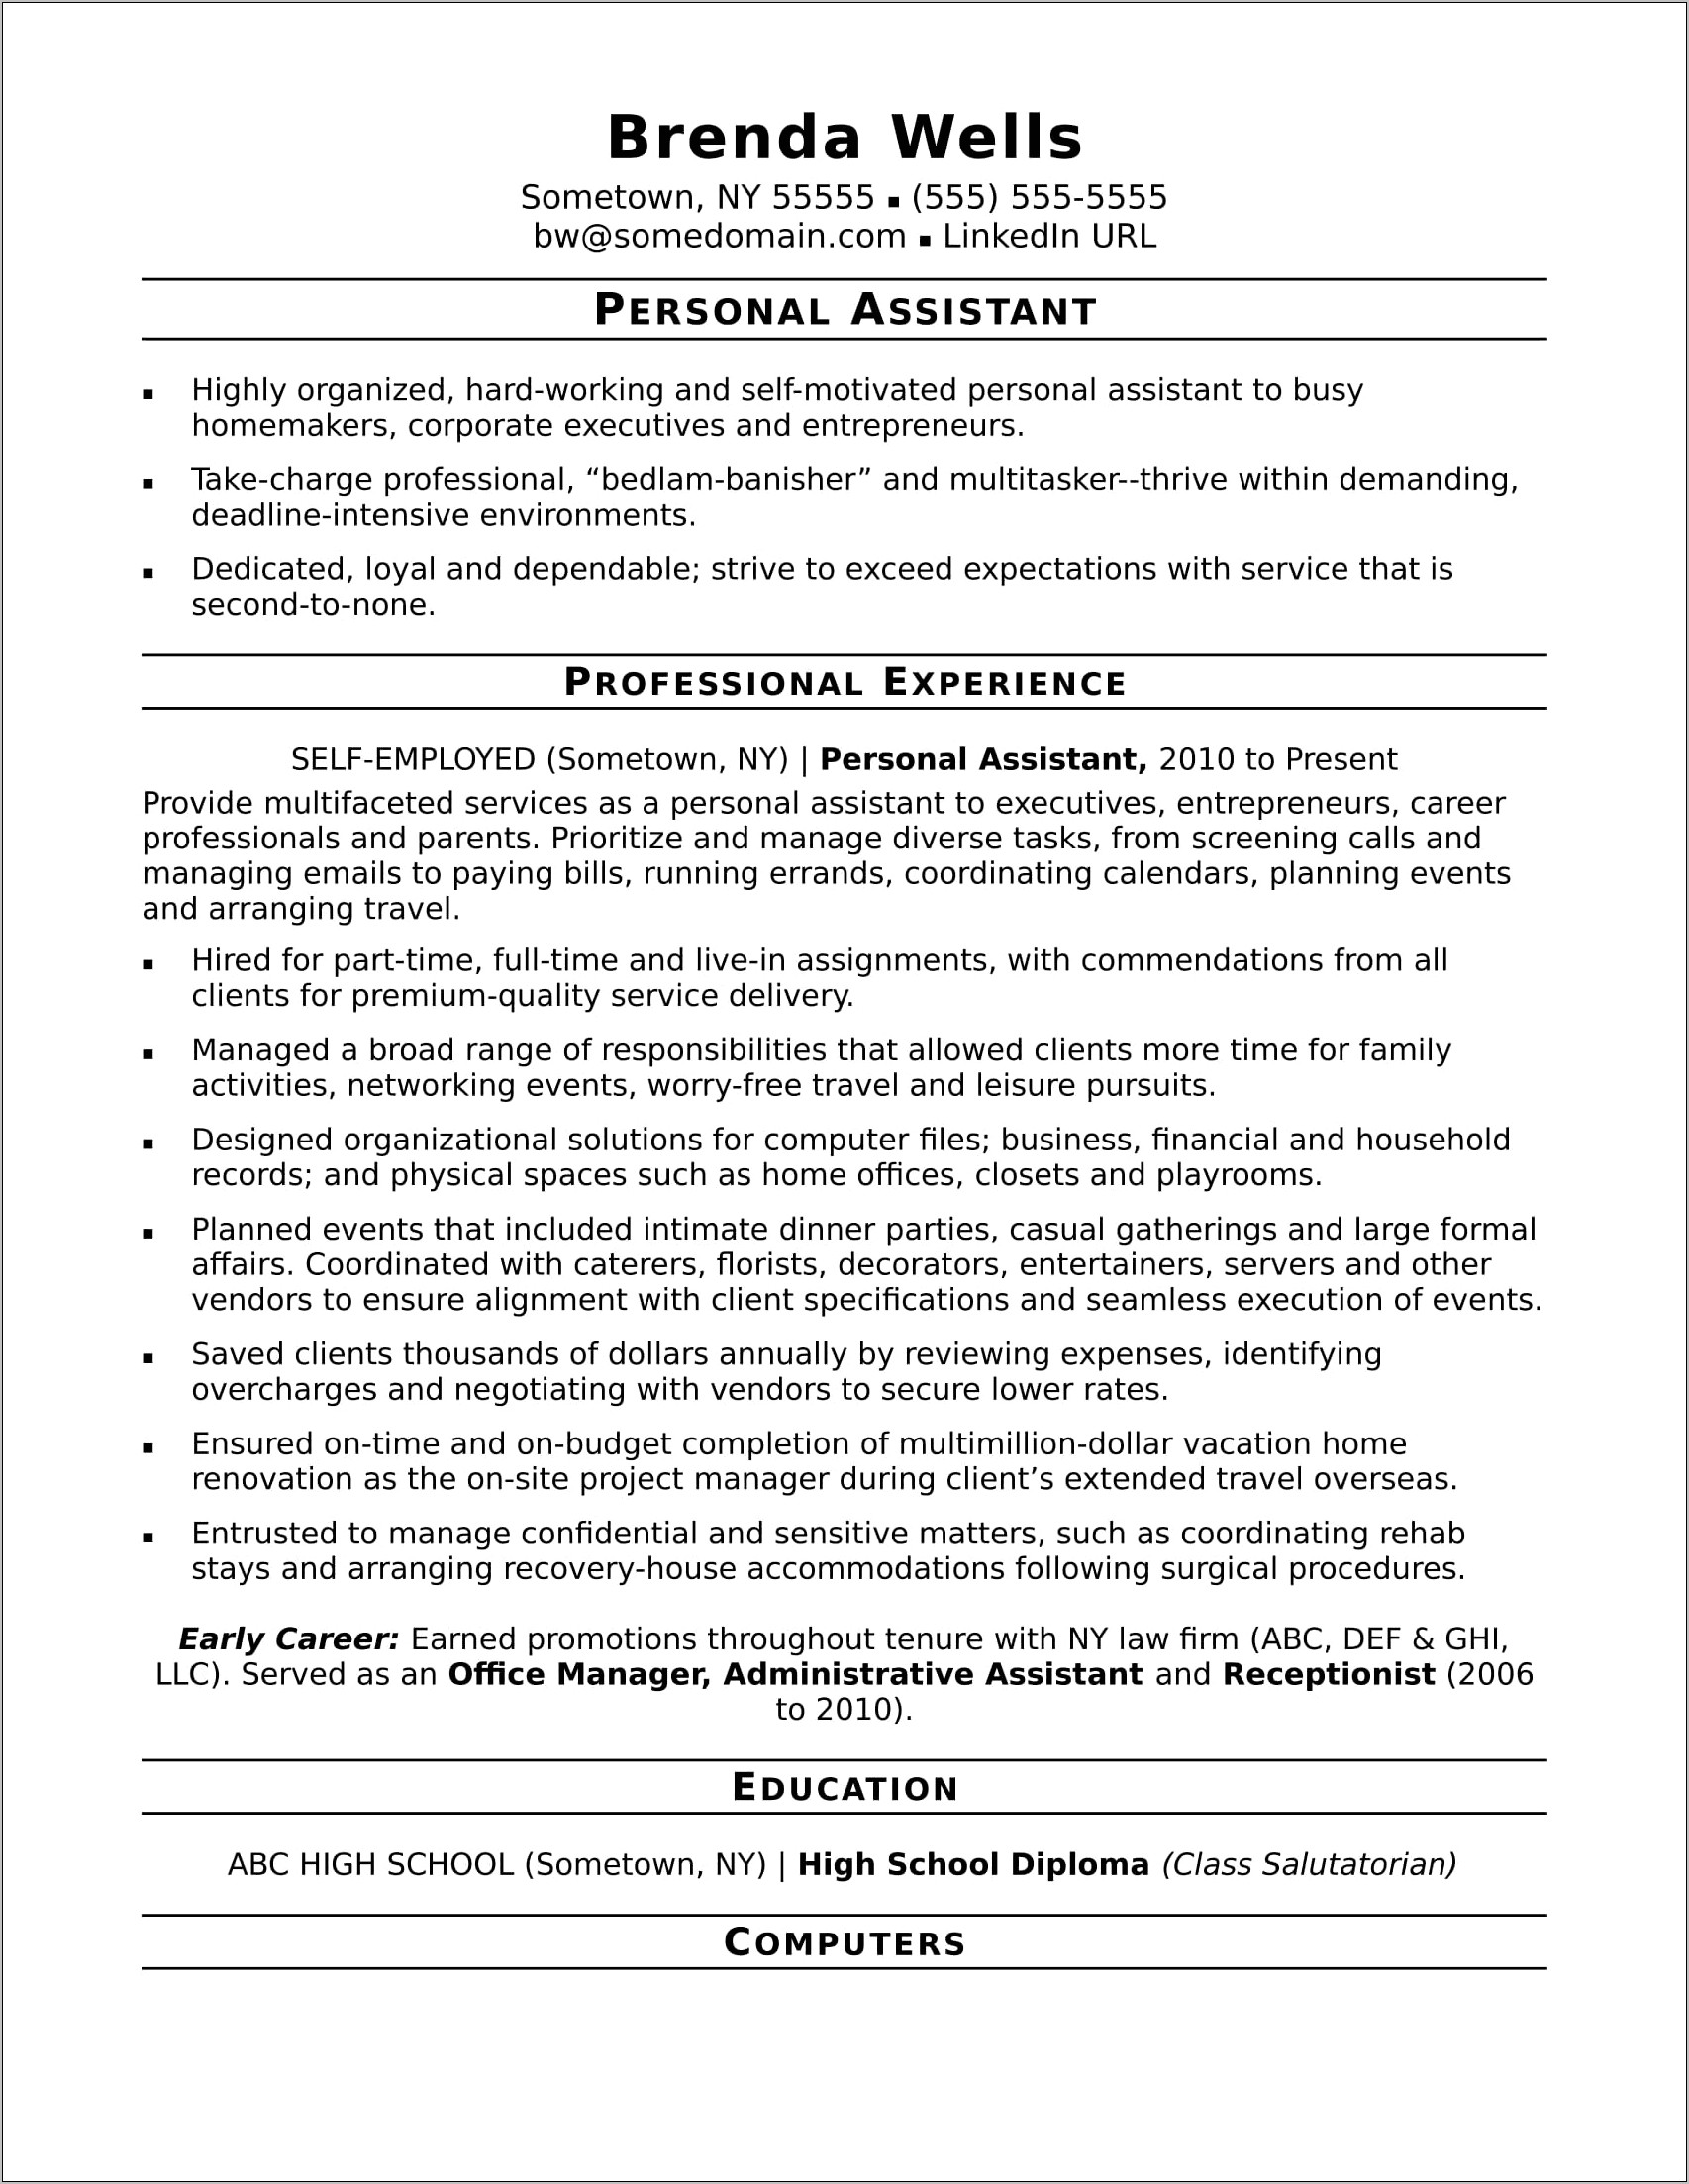 Description Of Self Employment For A Resume